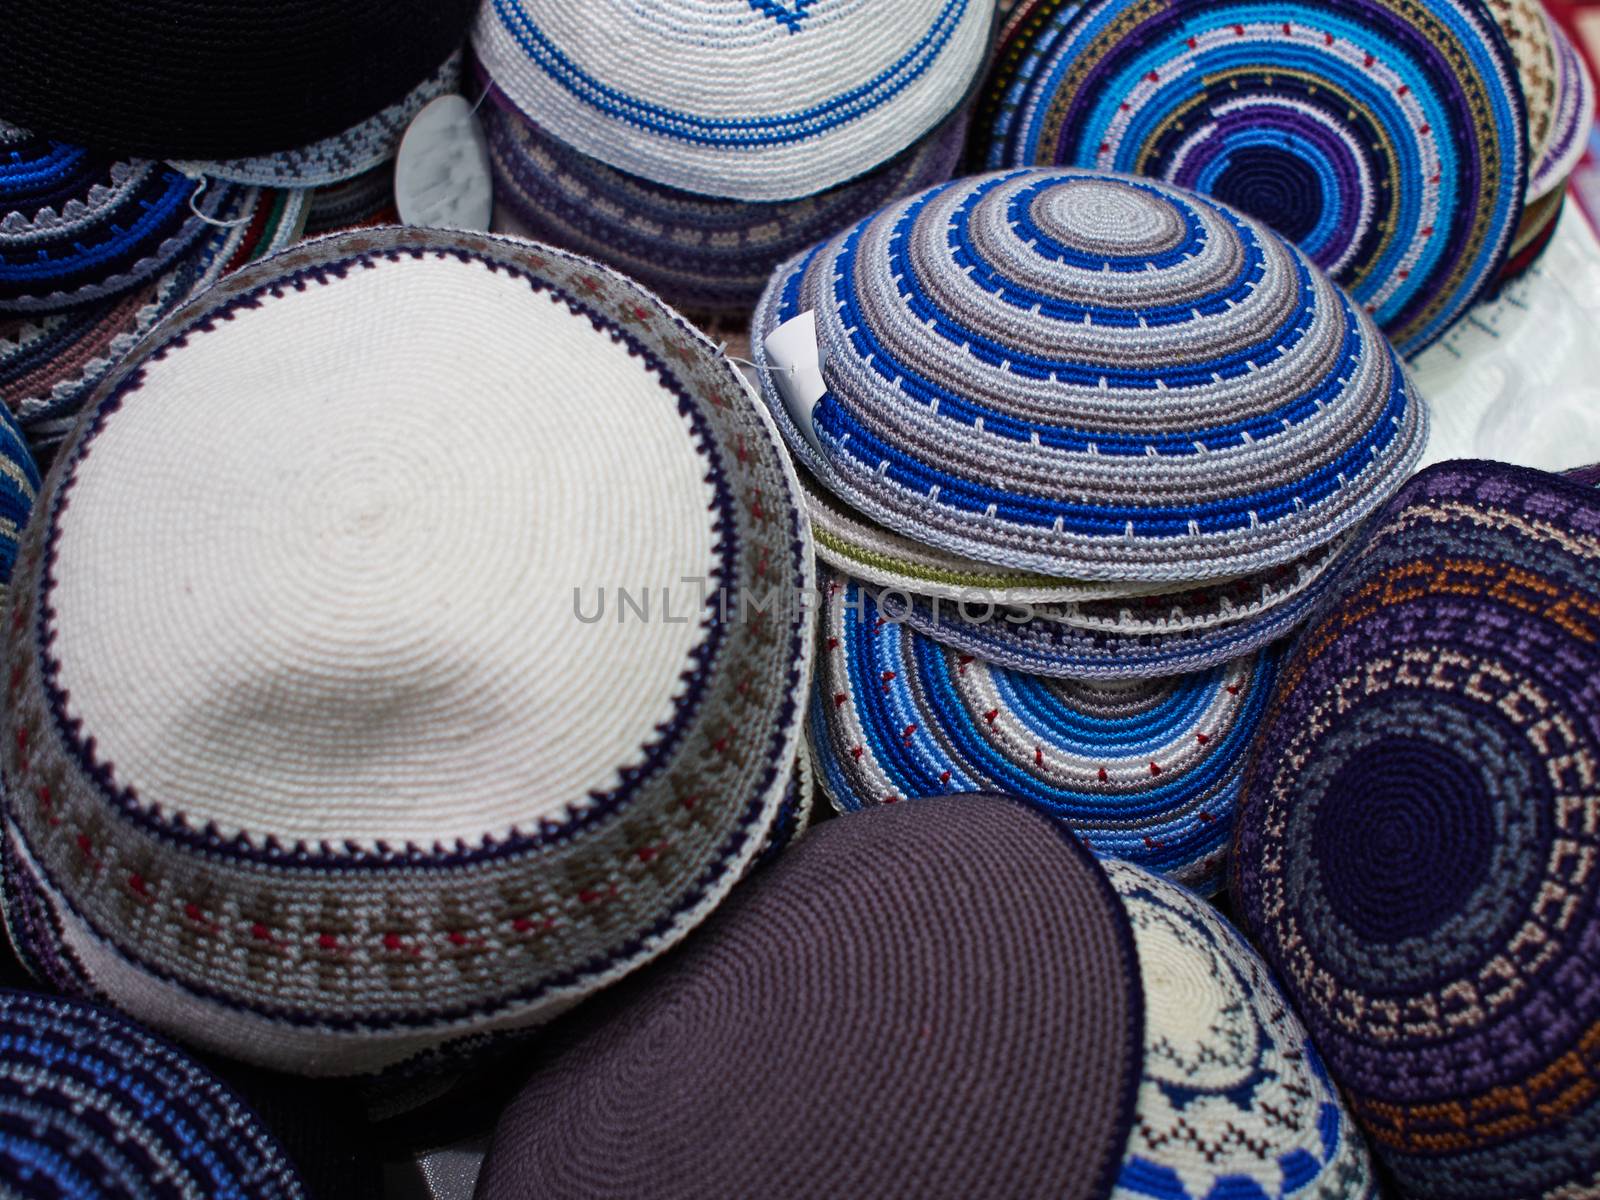 Wide Selection of Traditional Kippah Yarmulke Jewish Hats on Display